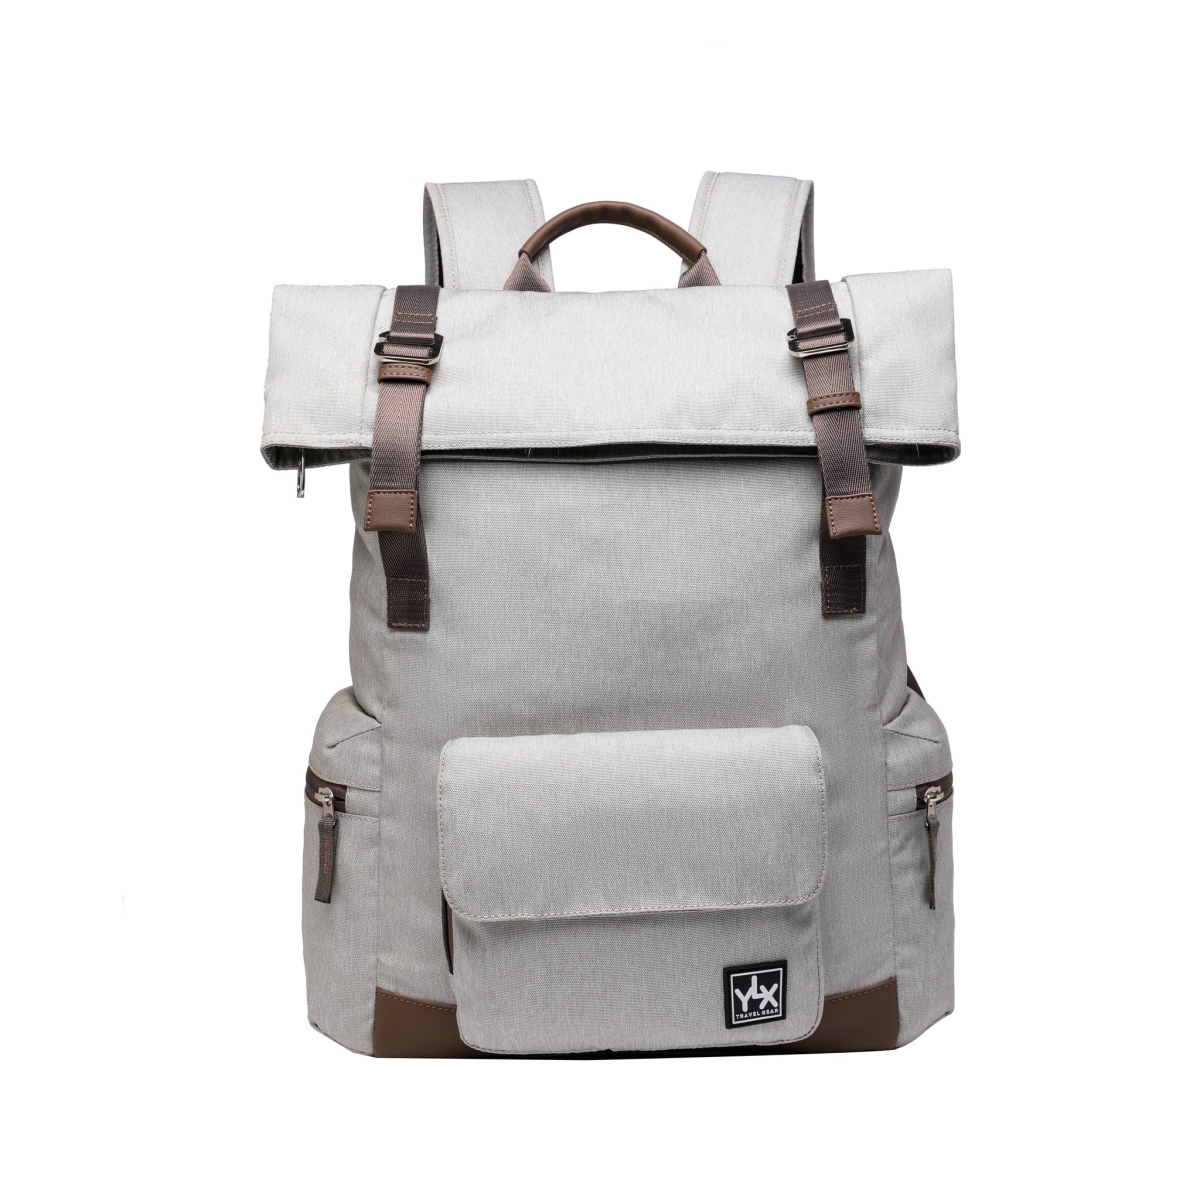 YLX Original Backpack 2.0 | Light Grey